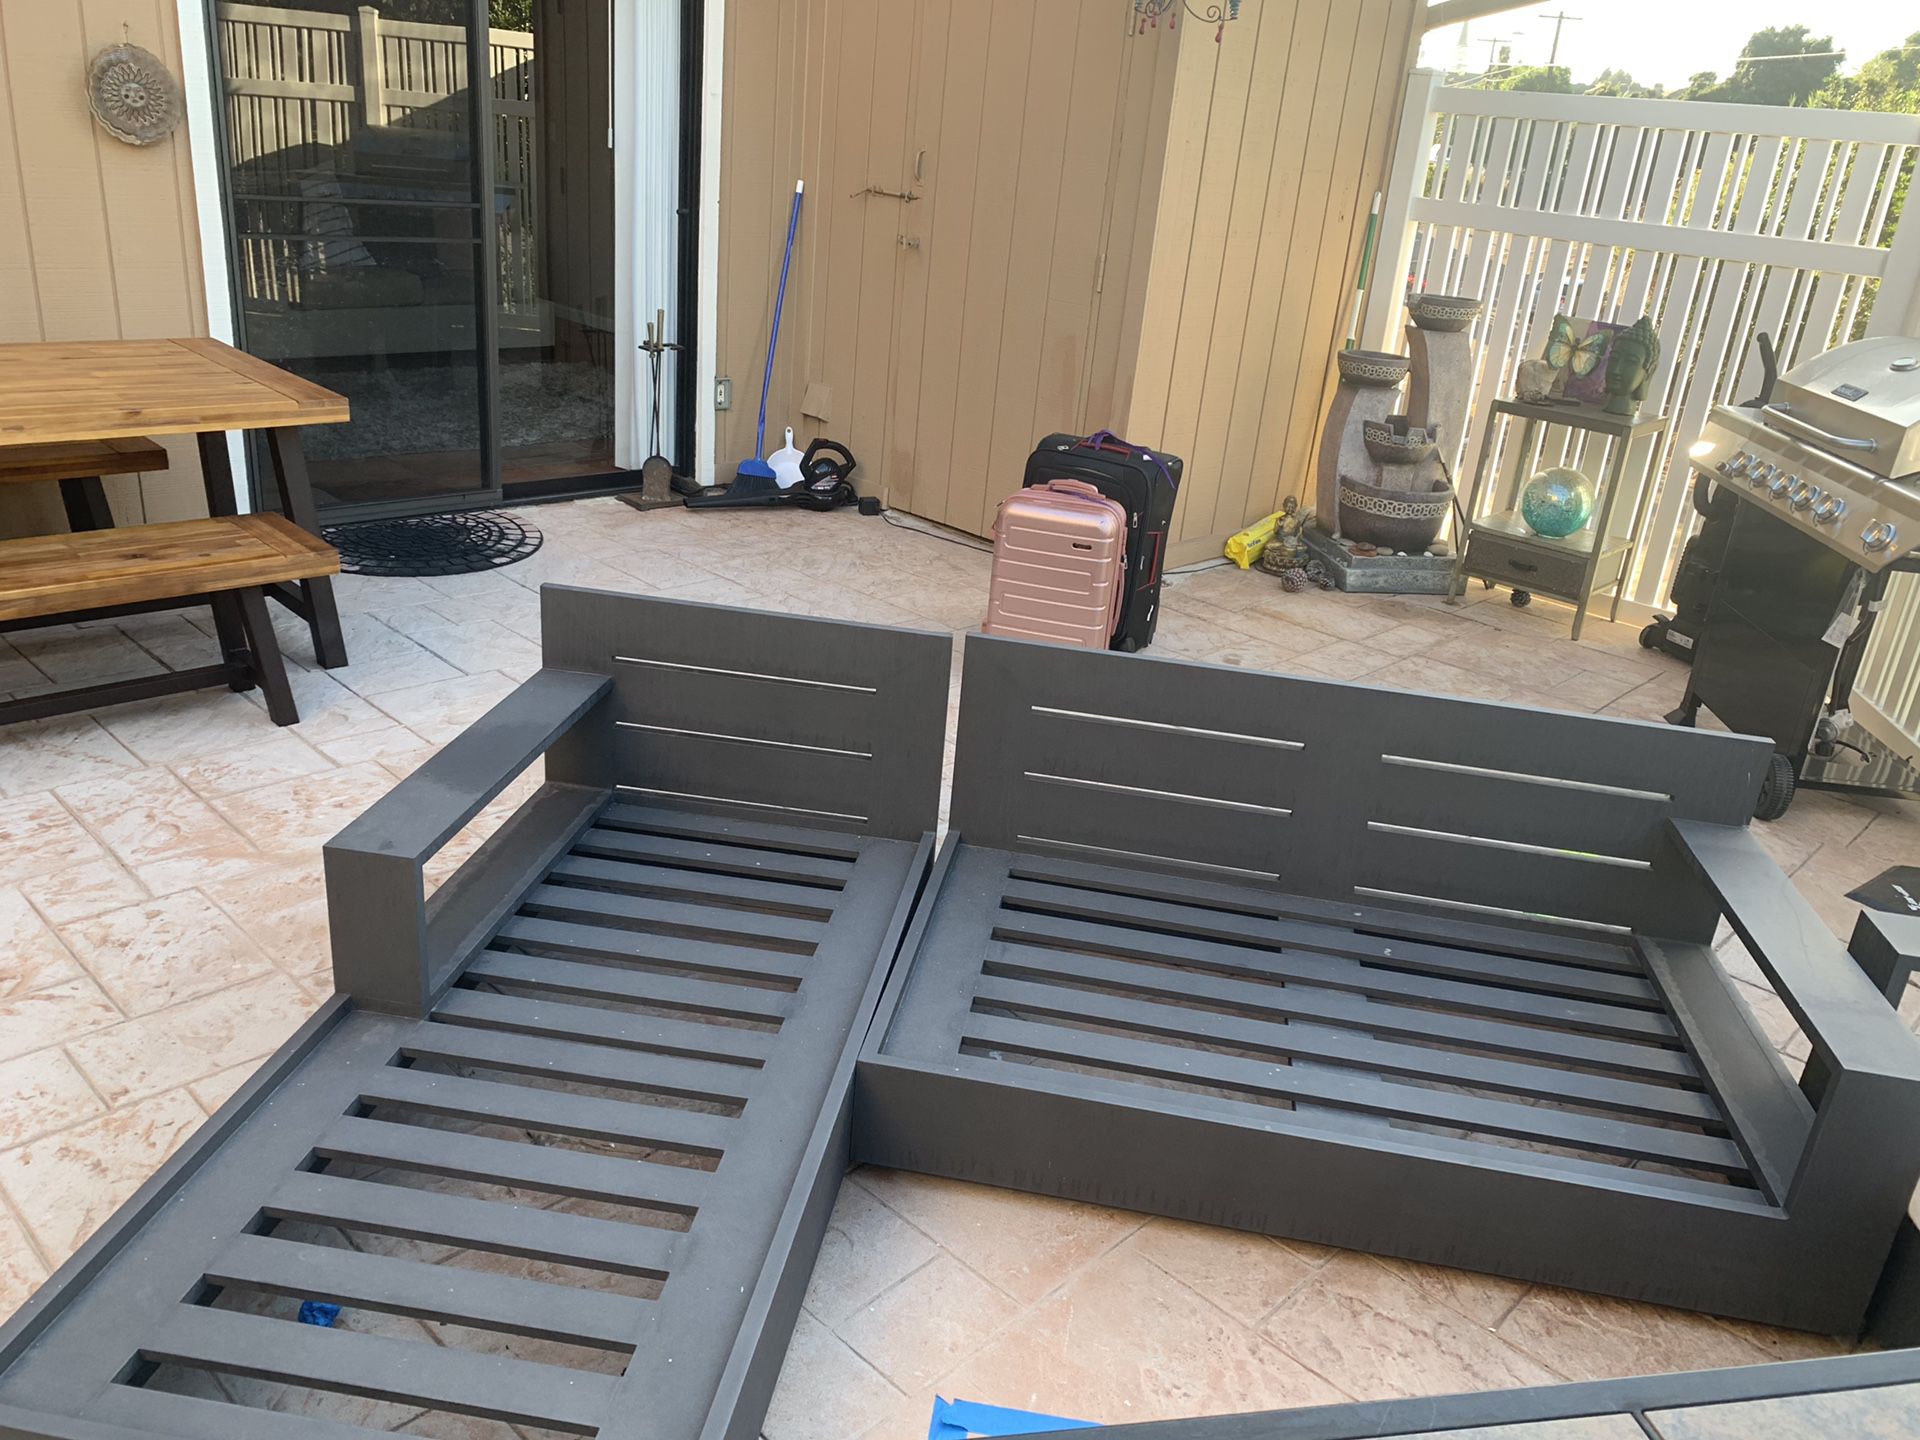 Restoration Hardware outdoor furniture